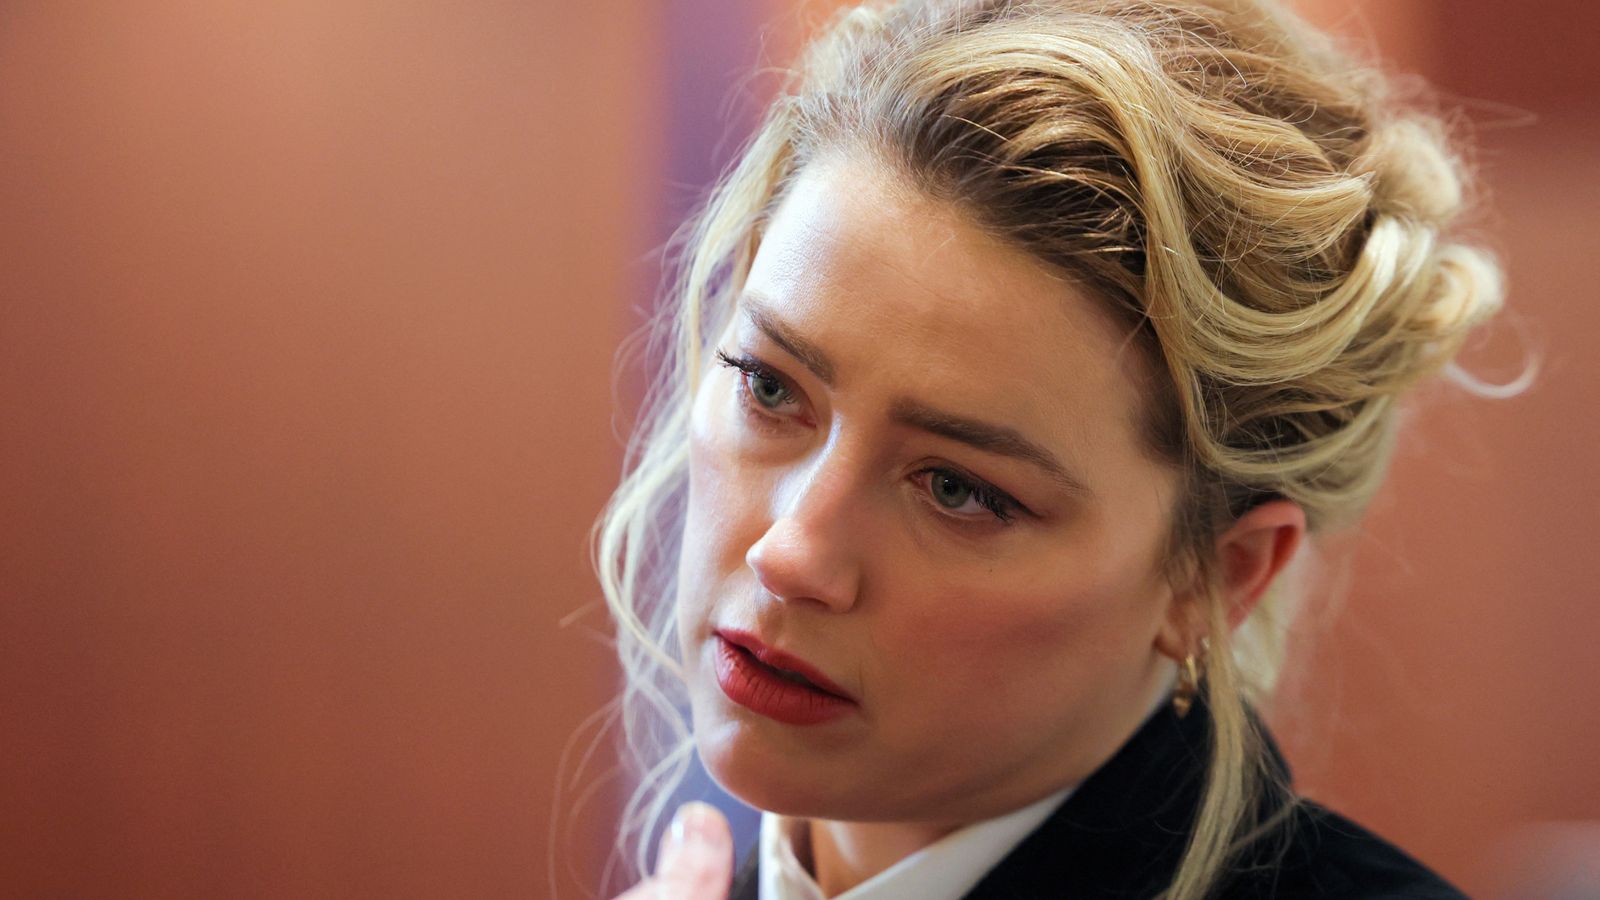 Amber Heard calls for new libel trial against Johnny Depp after losing multimillion-dollar defamation lawsuit